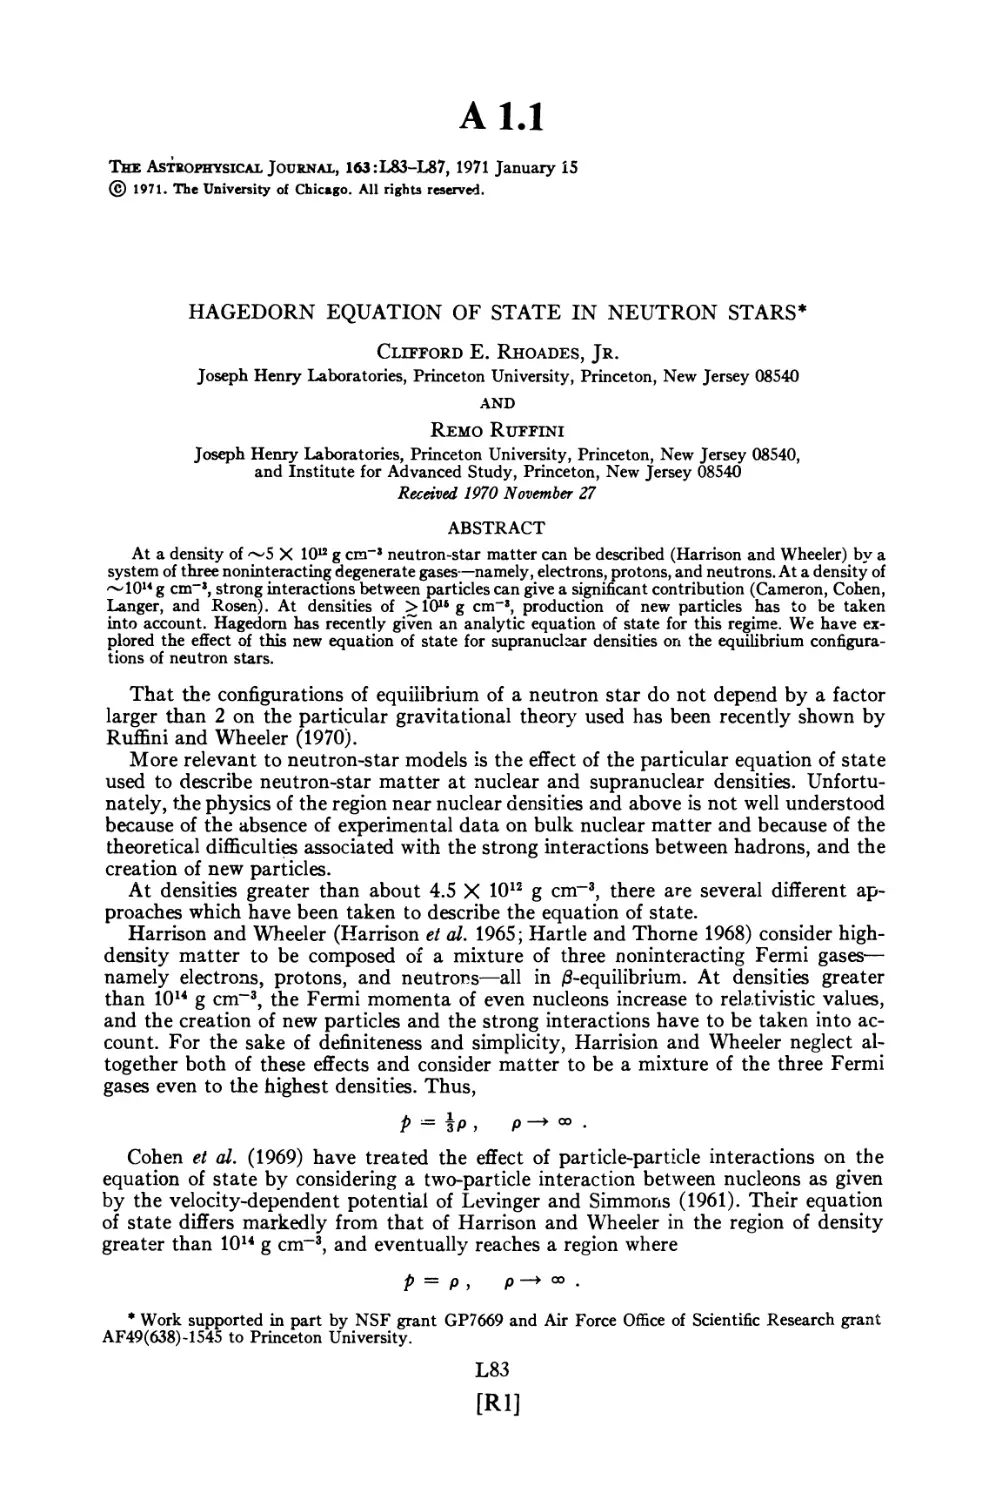 Appendix 1.1 Hagedorn Equation of State in Neutron Stars / C. Rhoades and R. Ruffini